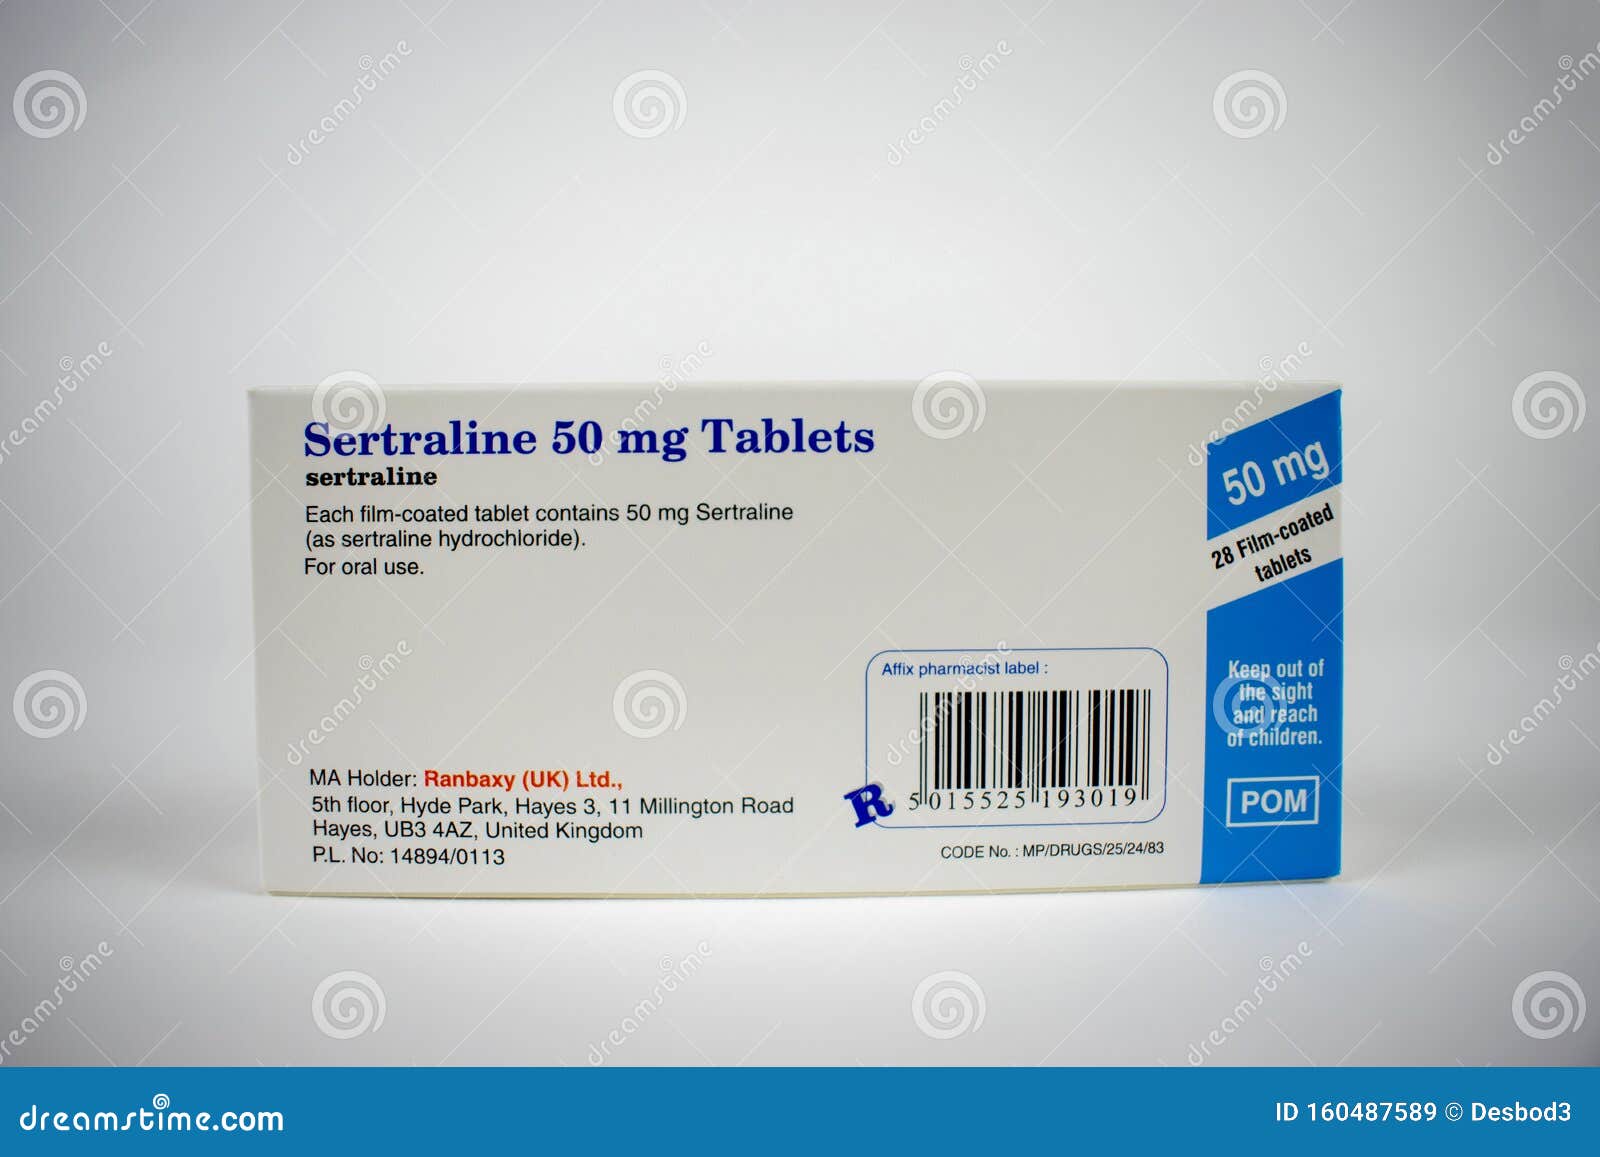 sertraline dosage for ocd